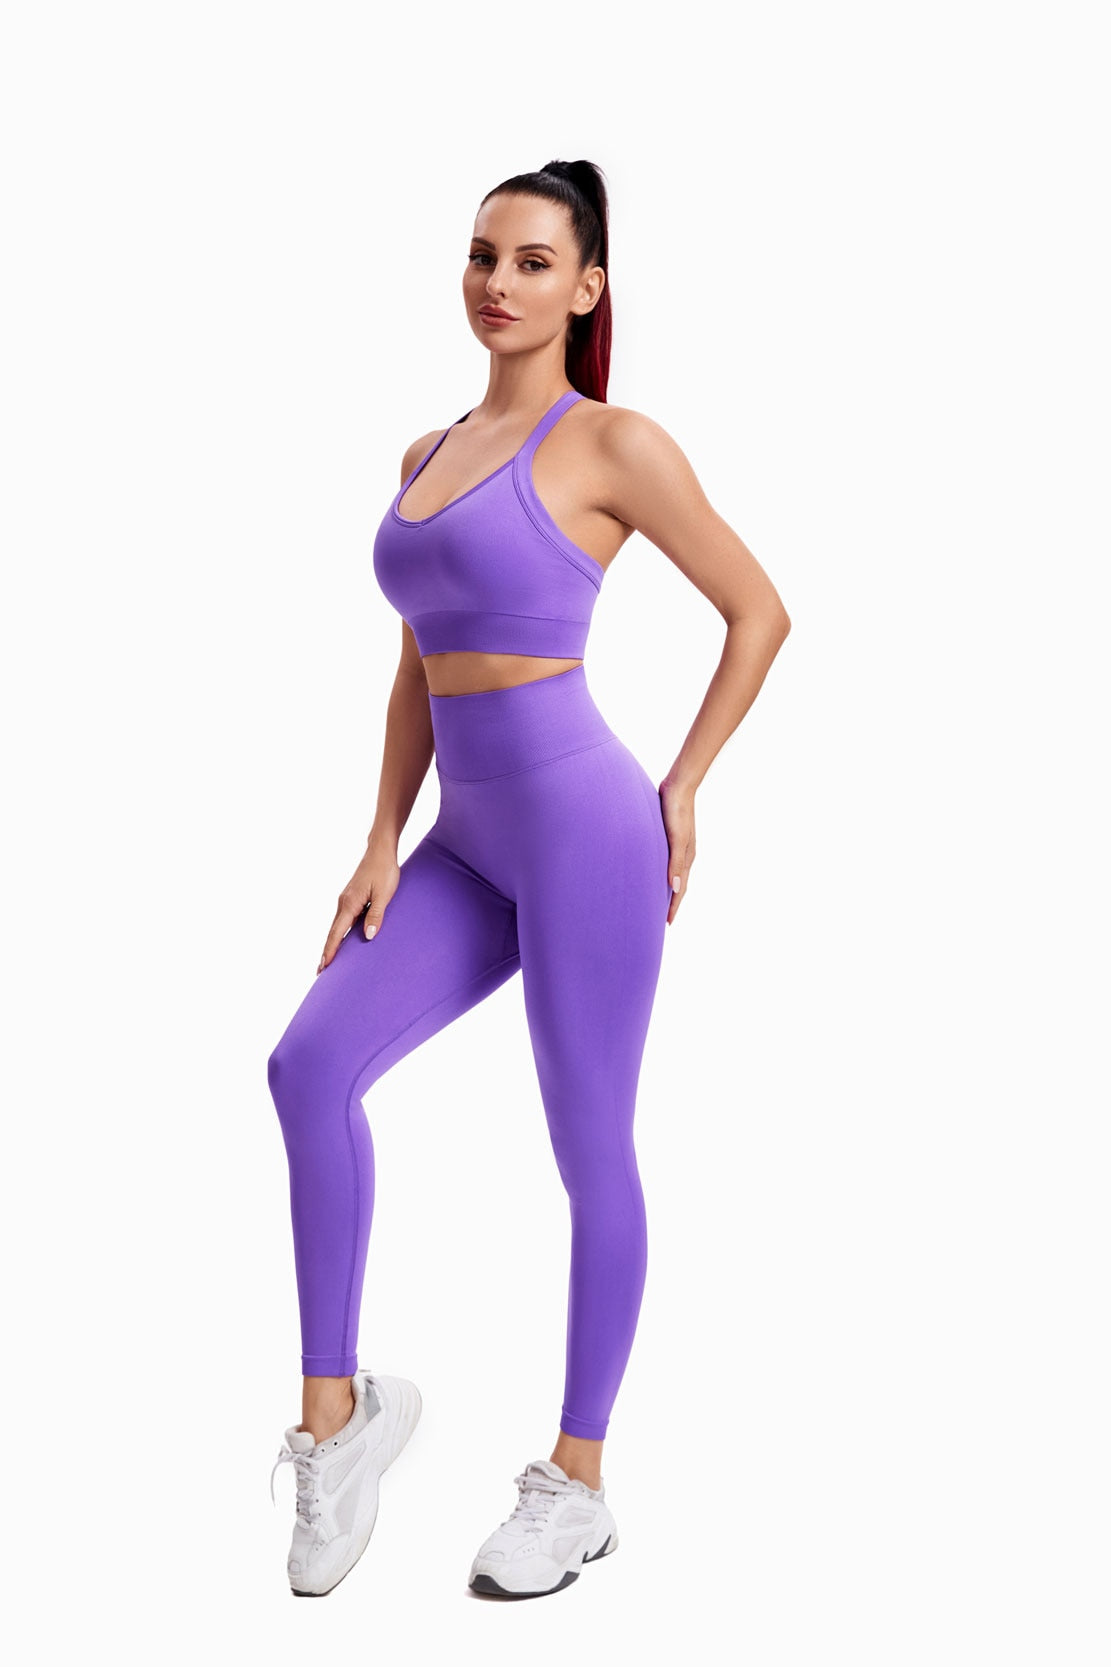 HIIT Workout Set - Leggings & Top Sets Truetights Wisteria Purple S 